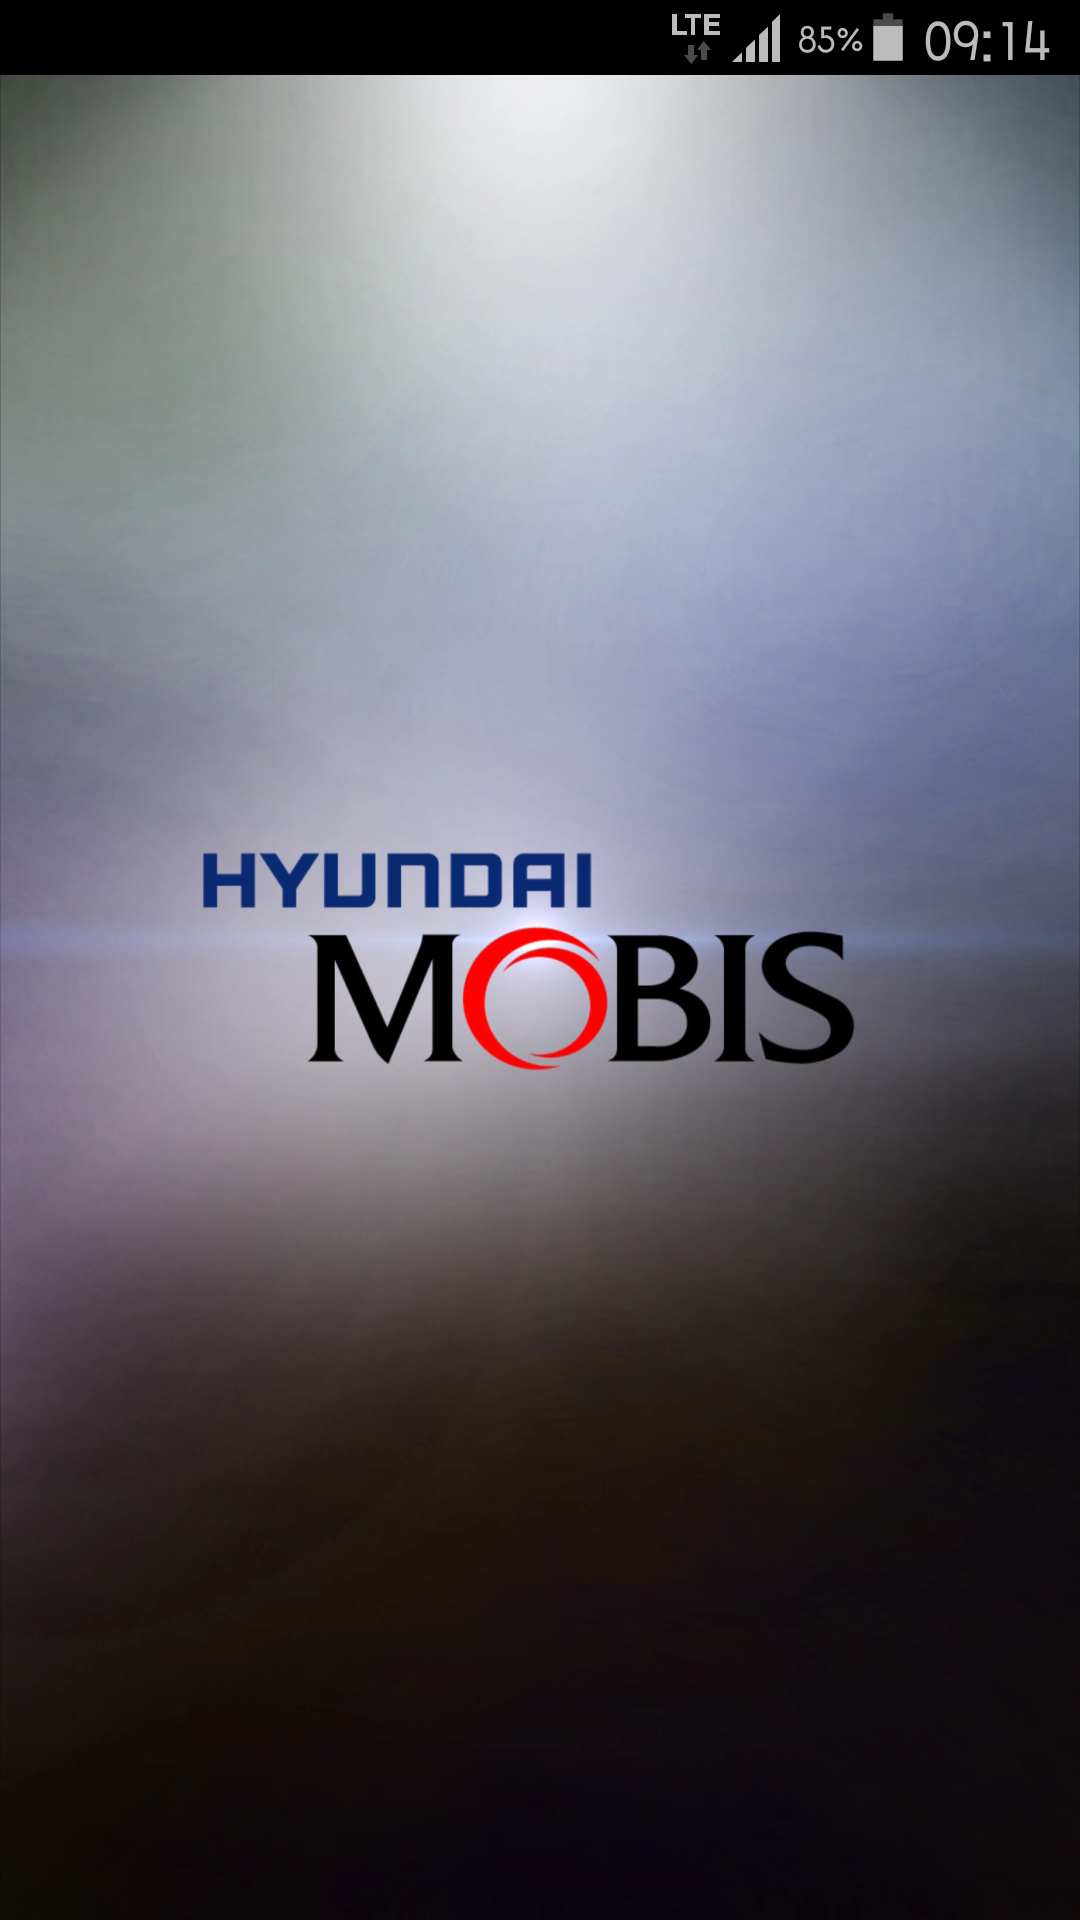 Android application HYUNDAI MOBIS - 현대모비스 사보 screenshort